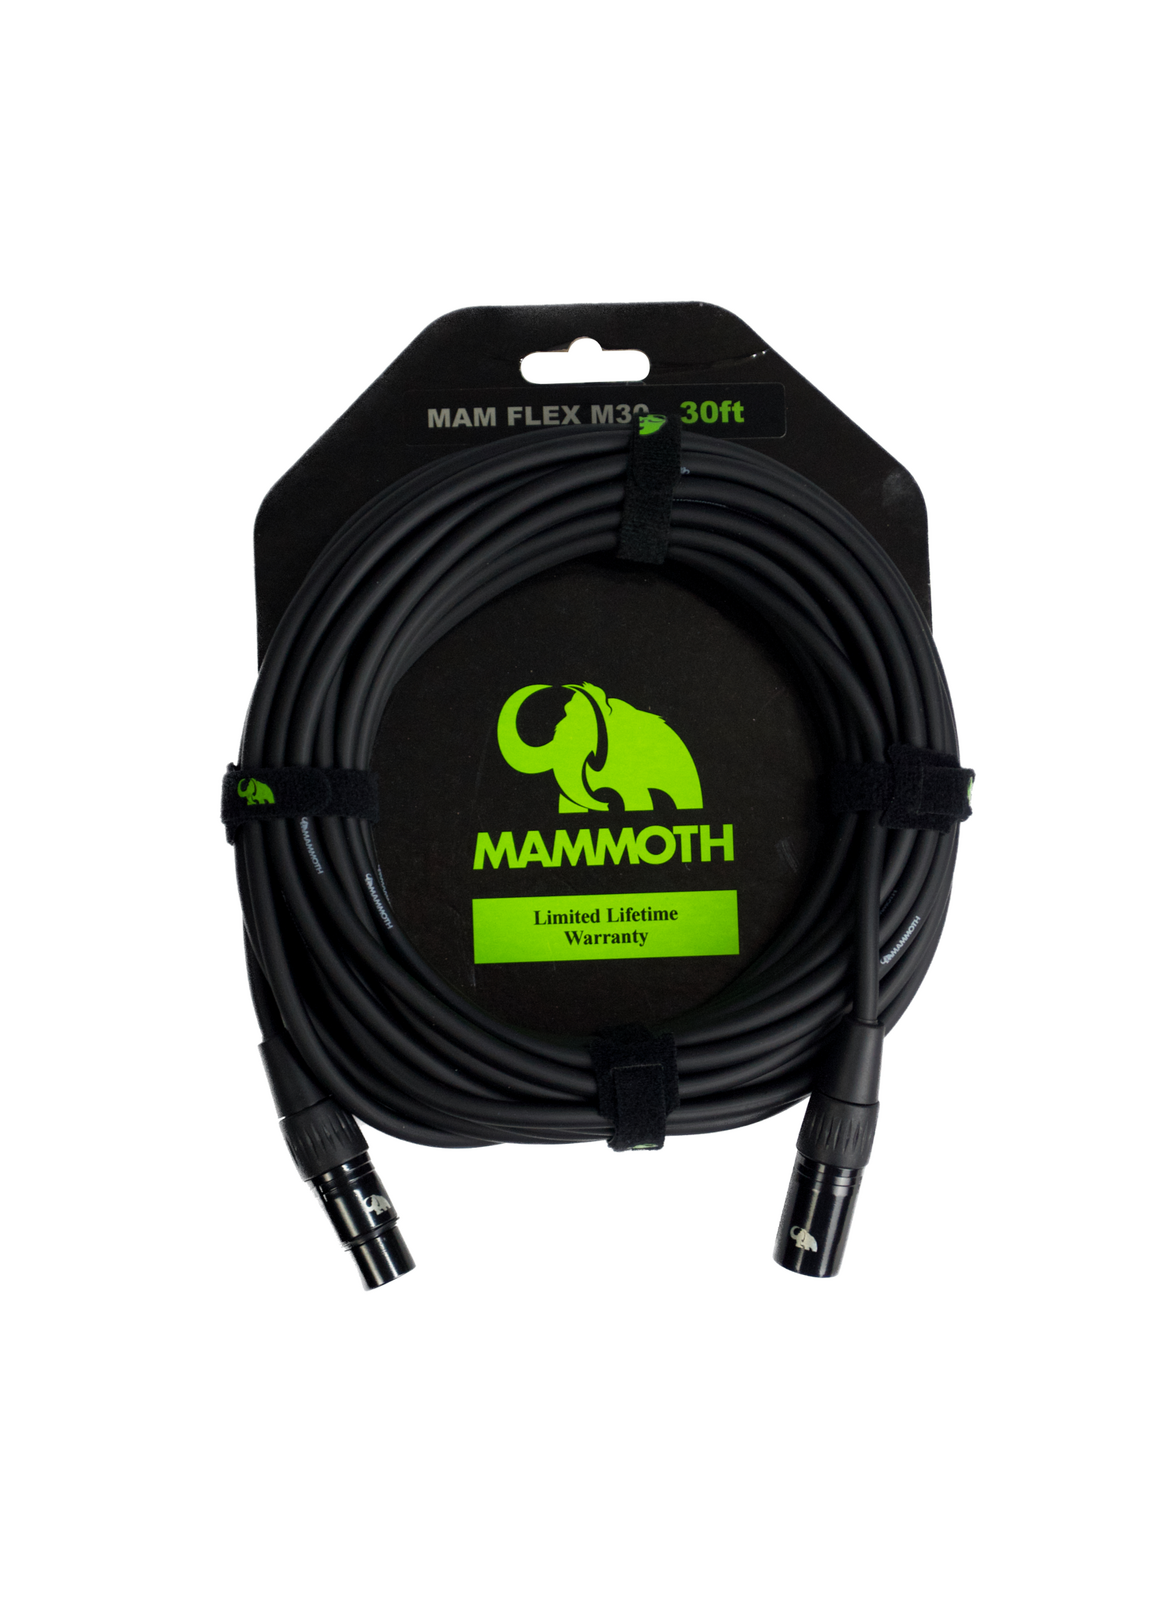 Mammoth Flex M30, 30ft Mic Cable, XLR to XLR